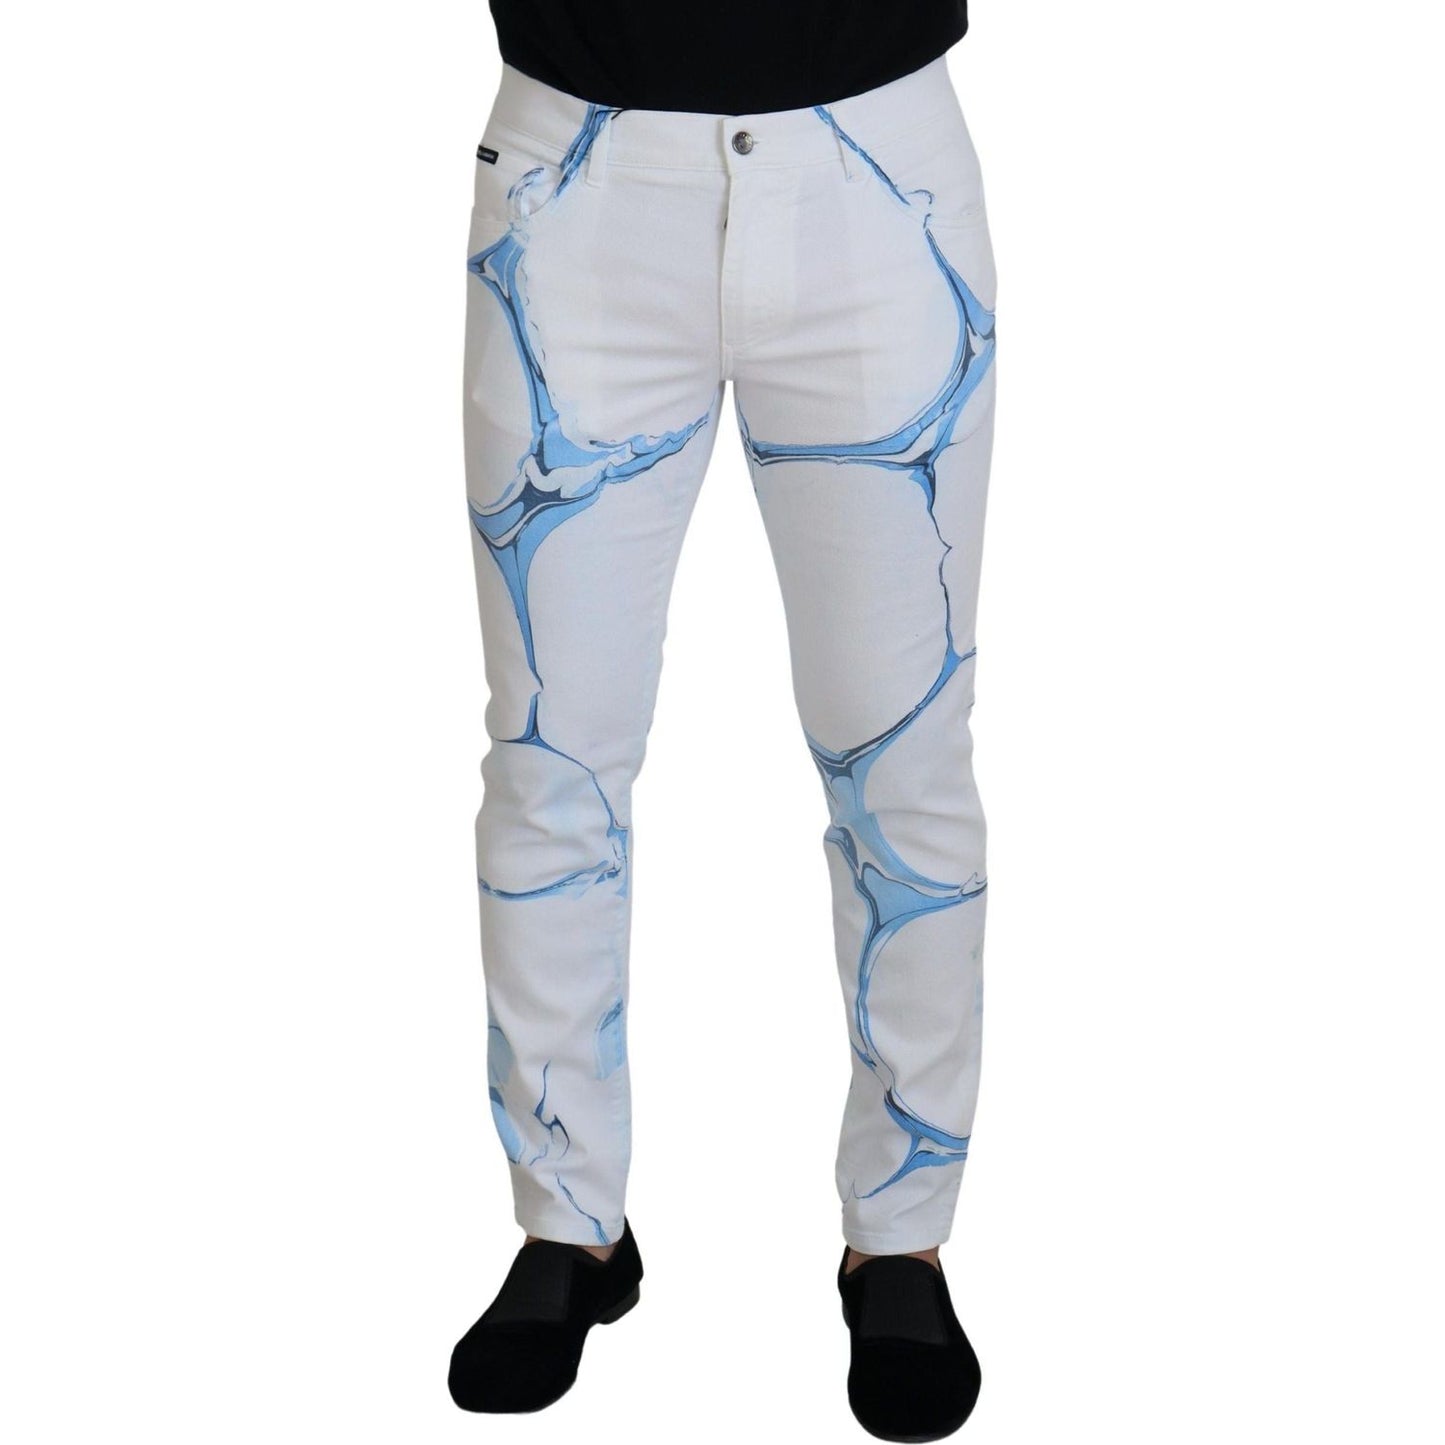 Dolce & Gabbana Elegant Slim Fit Casual Jeans white-blue-denim-cotton-jeans-stretch-skinny-fit-pant